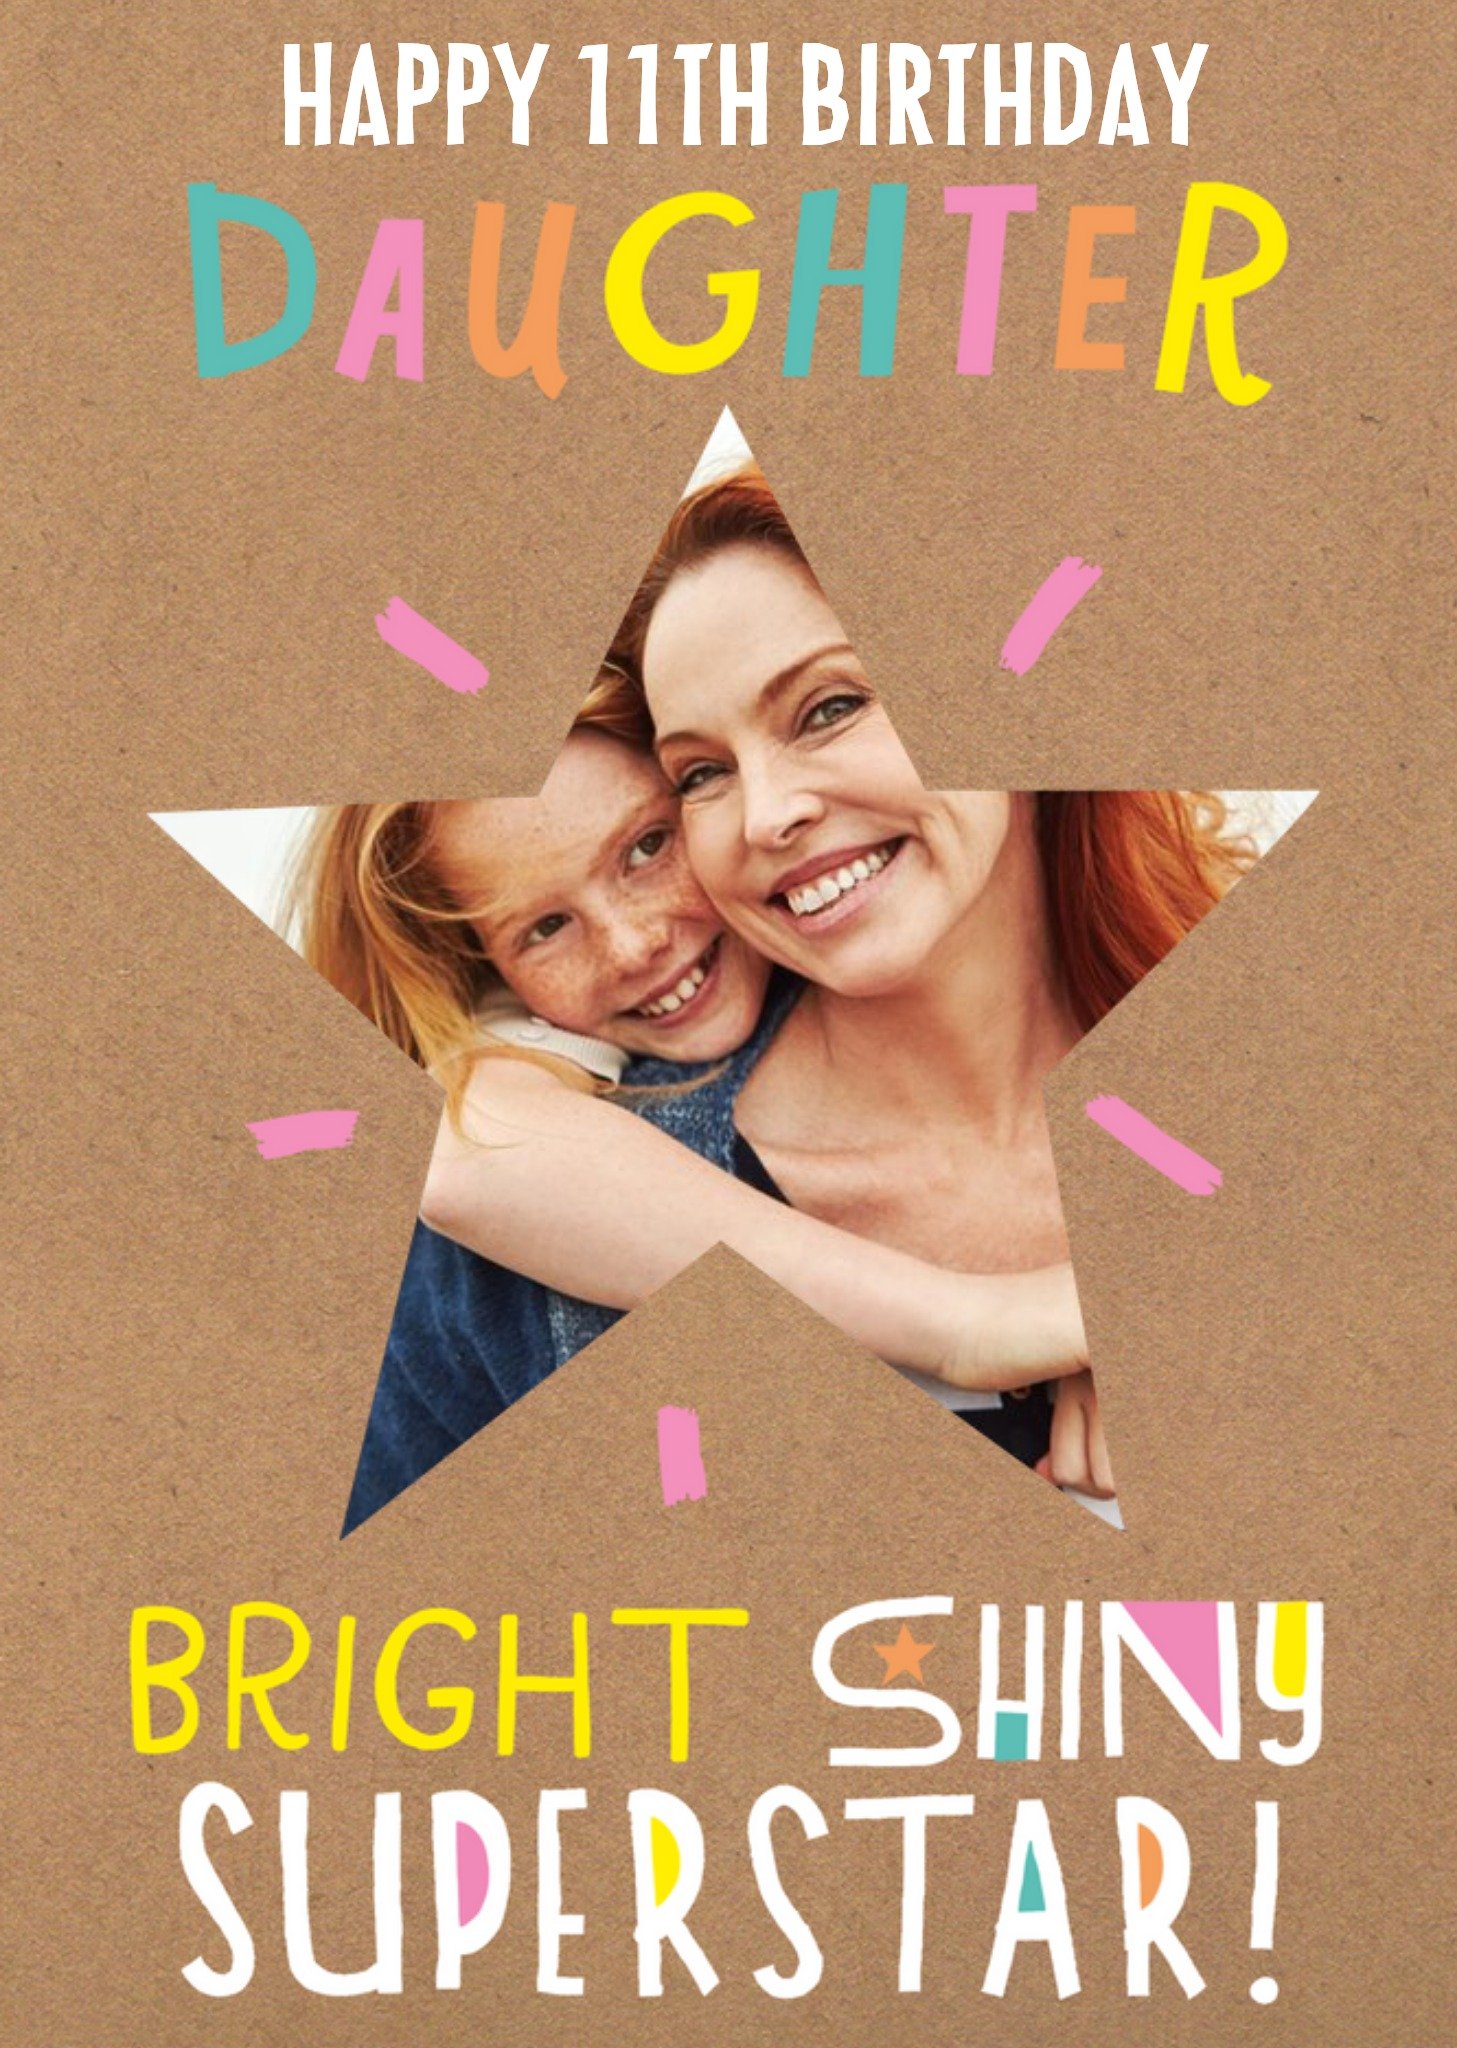 Moonpig Bright Shiny Superstar Photo Upload Daughter Birthday Card, Large